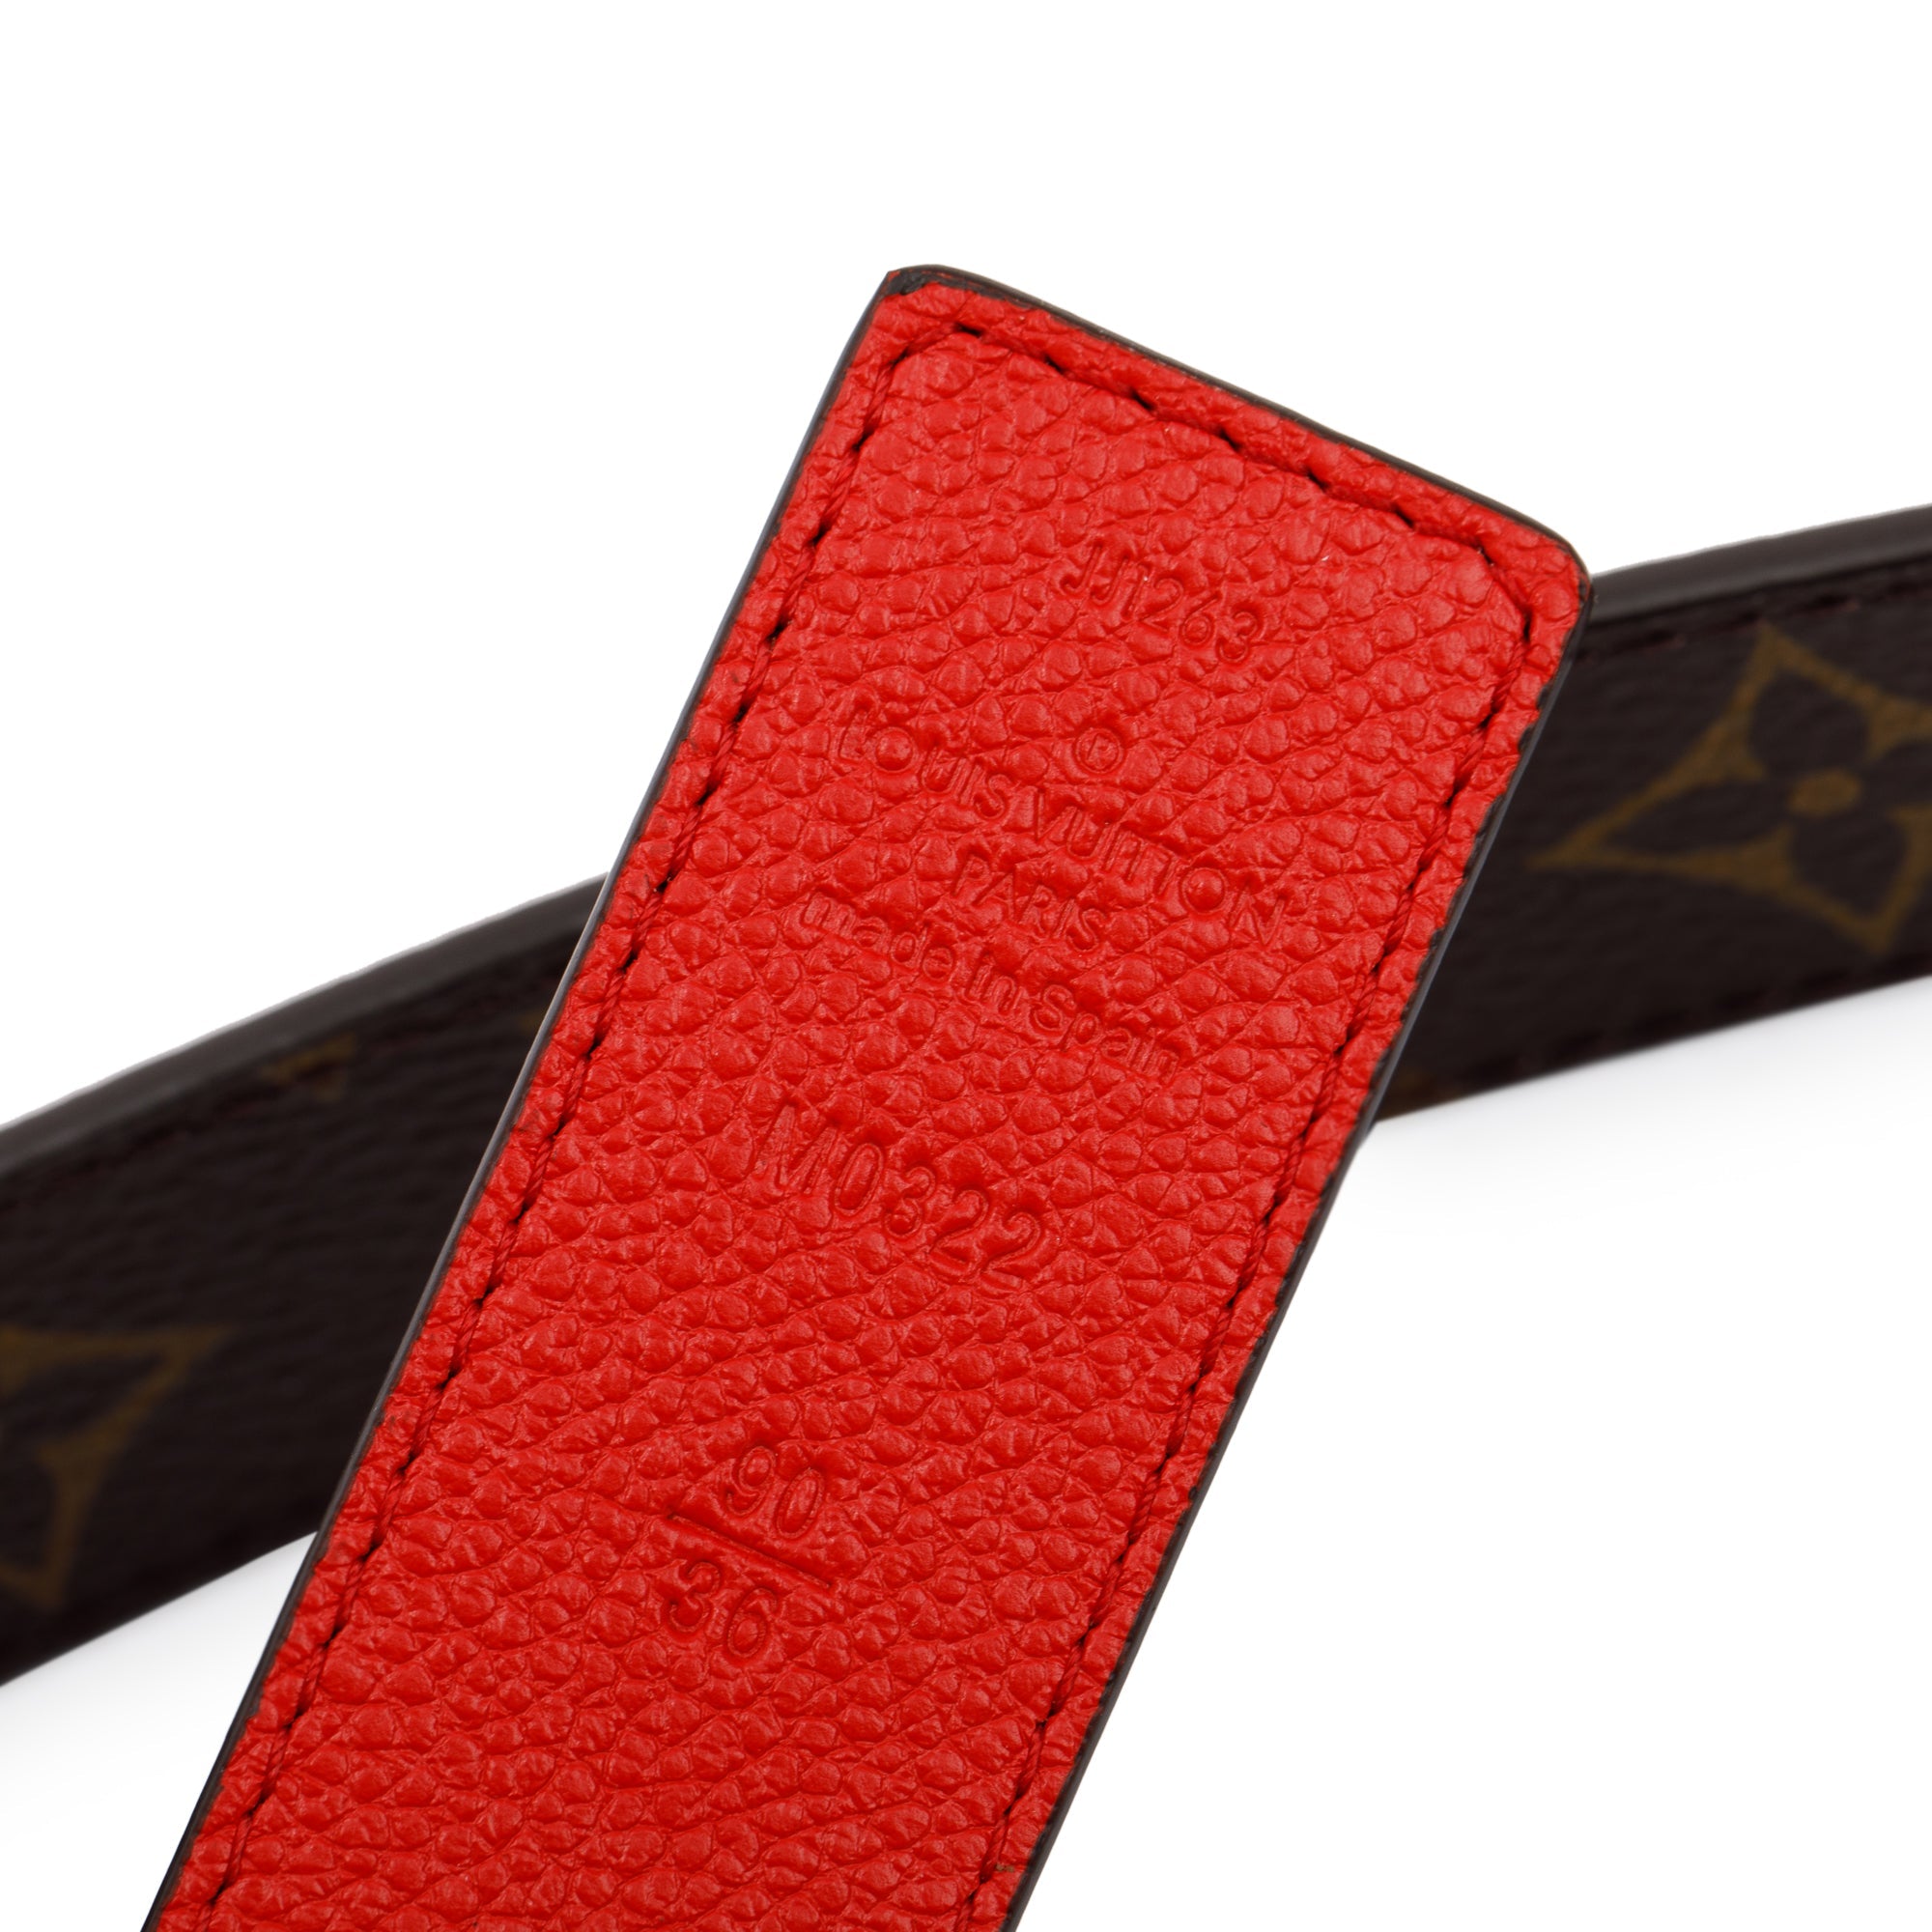 Louis Vuitton Plain Leather Logo Belts (M8370Y) in 2023